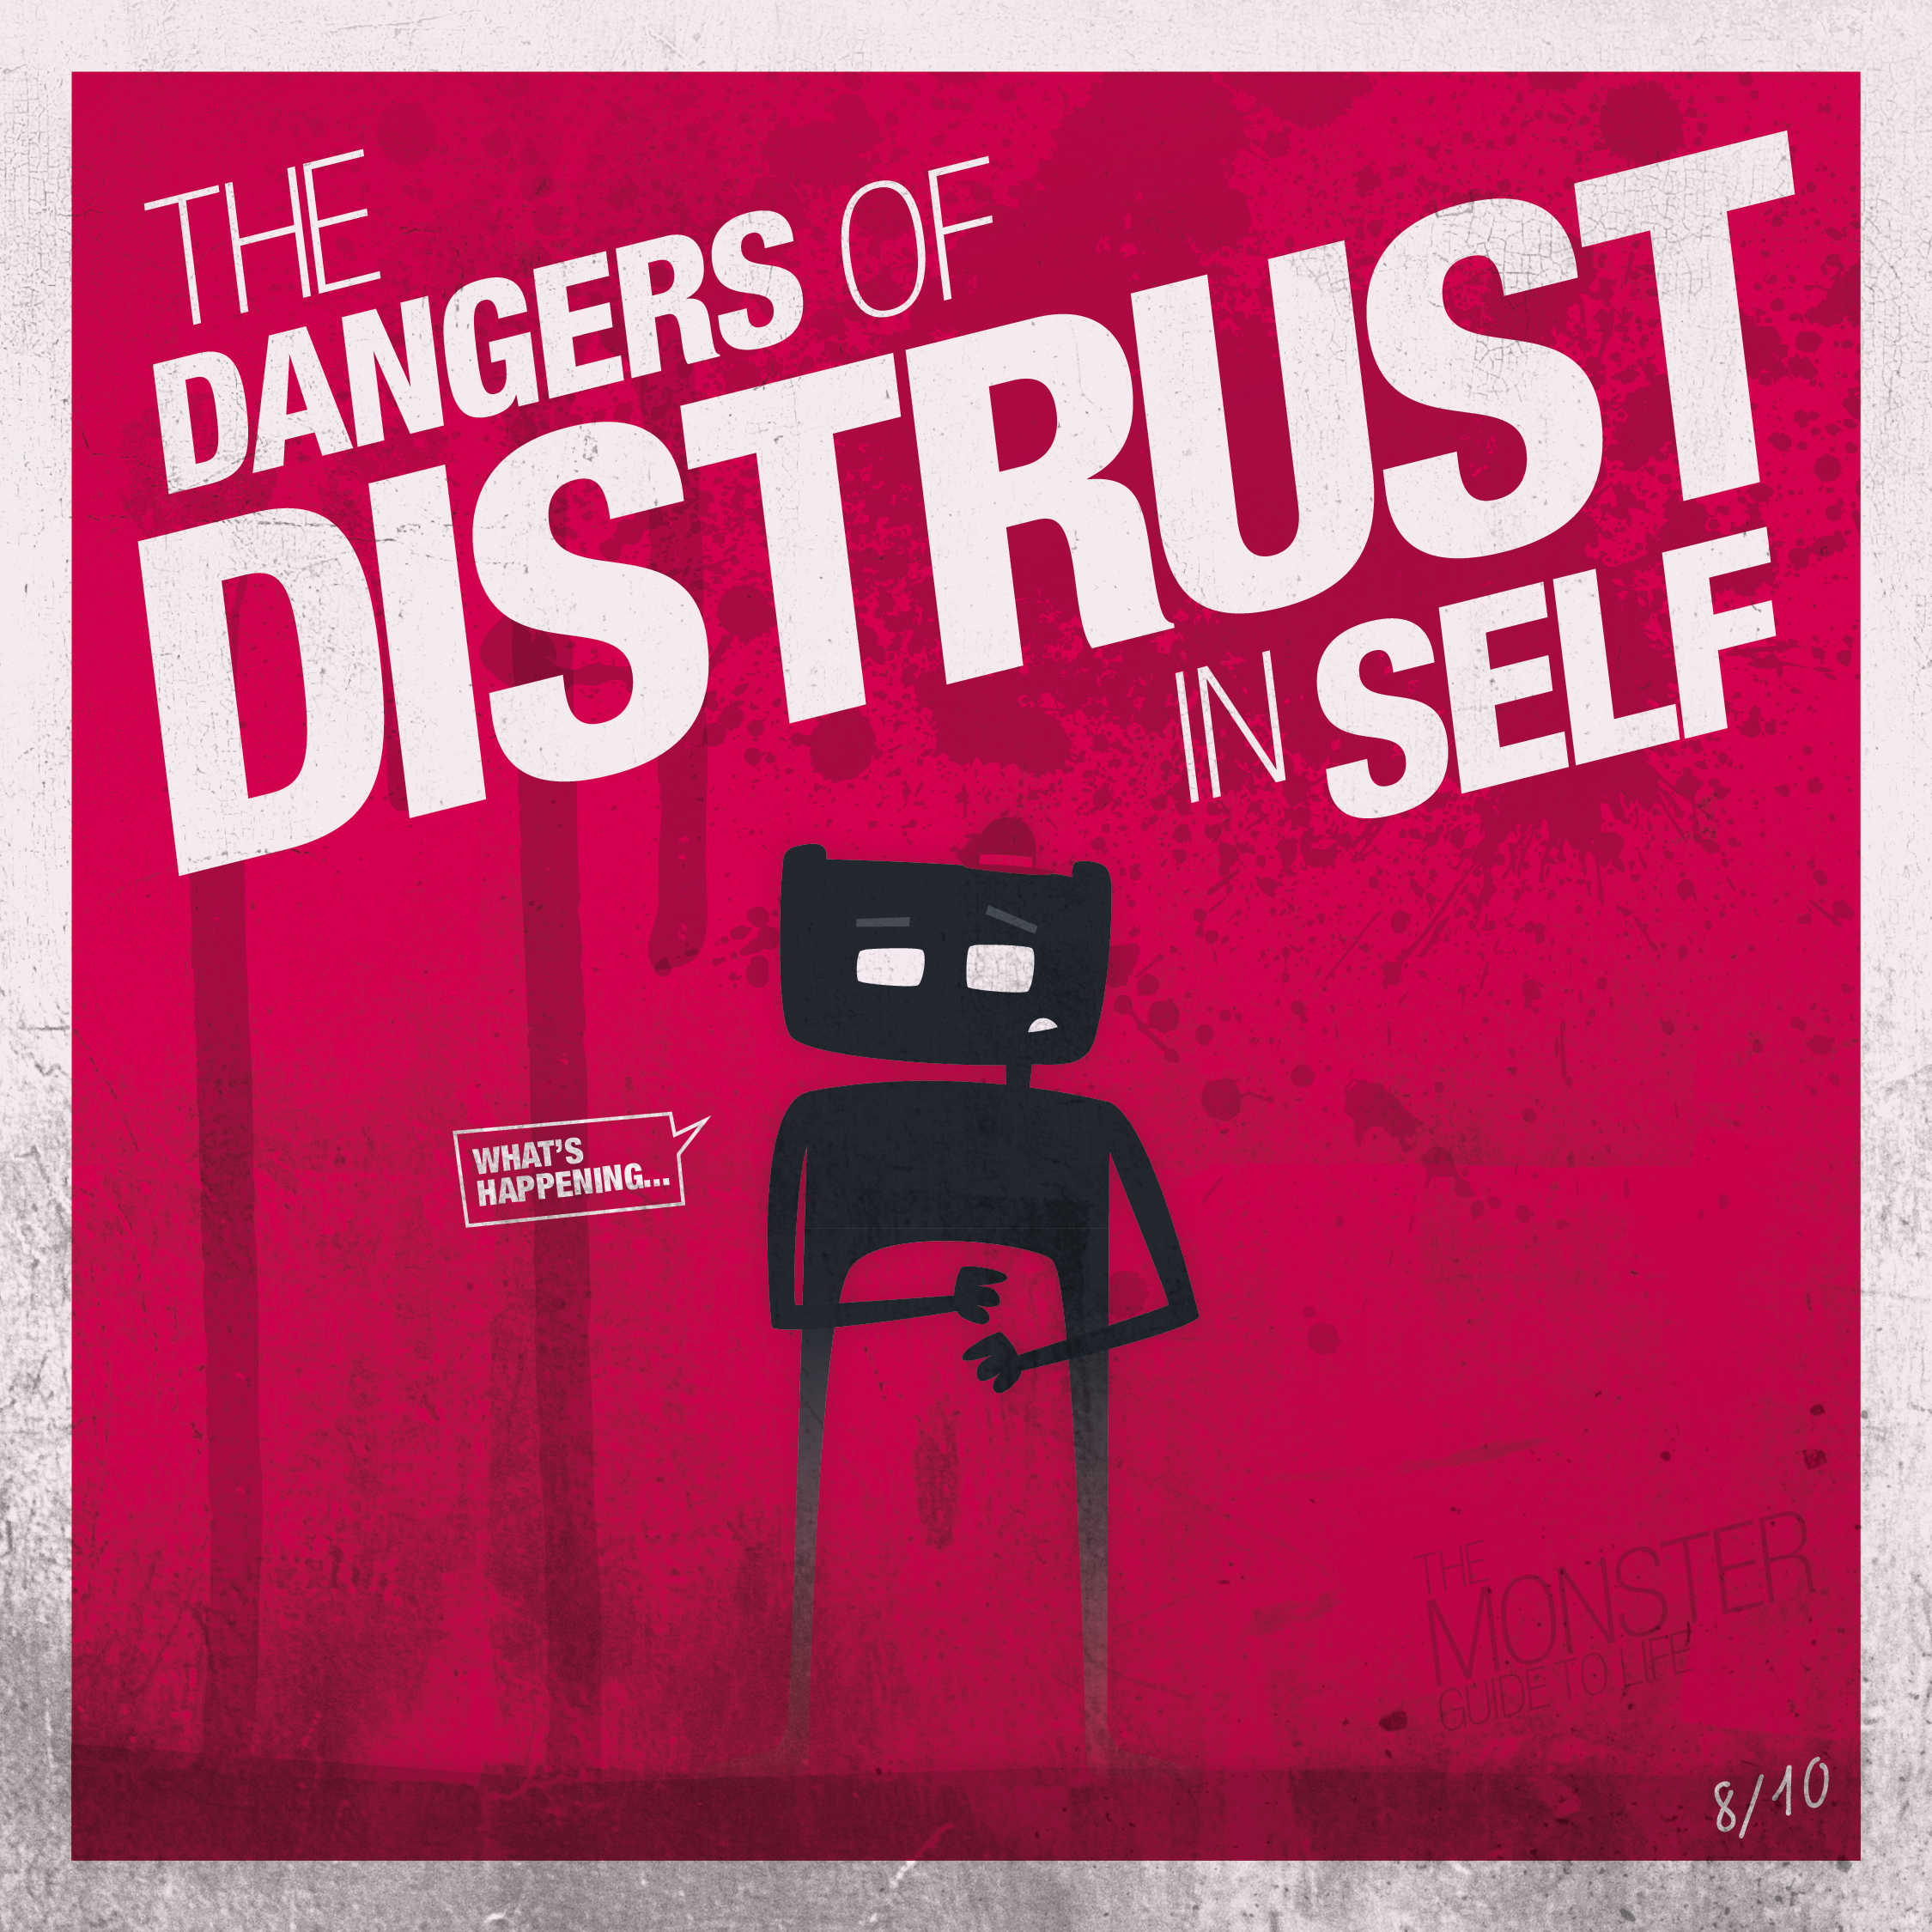 The dangers of distrust in self